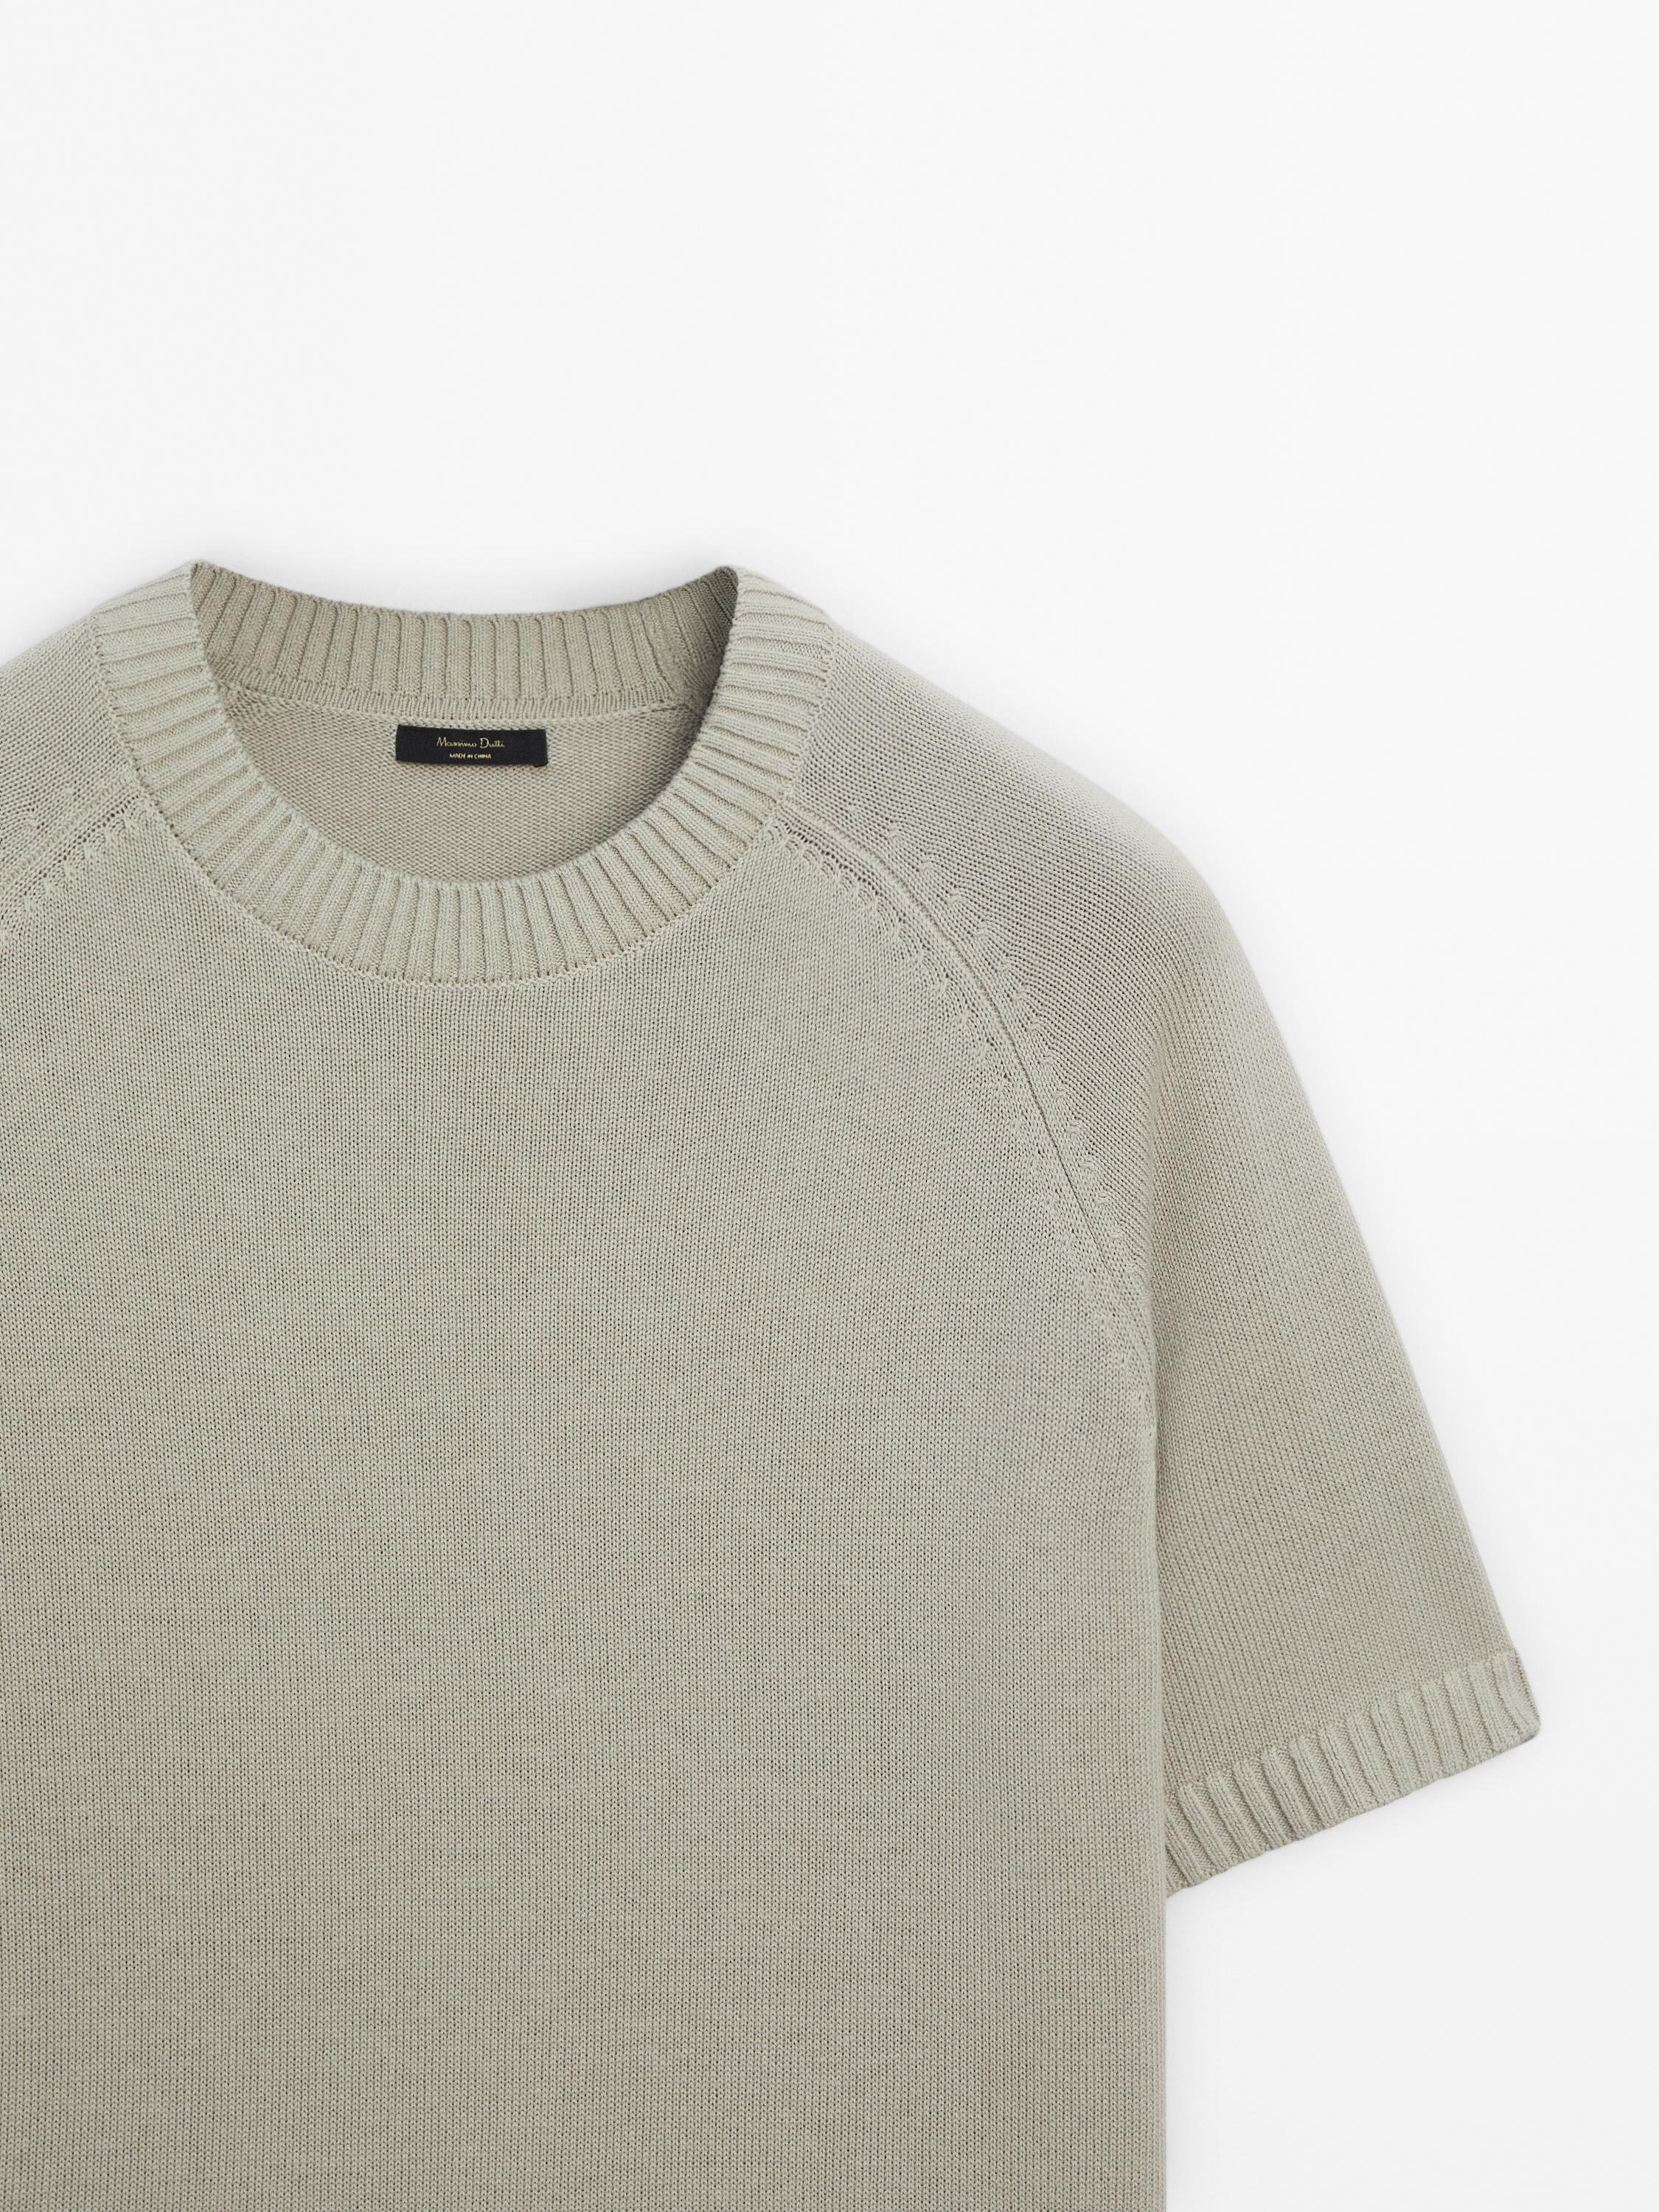 Short sleeve knit sweater with cotton - Ecru | ZARA United States